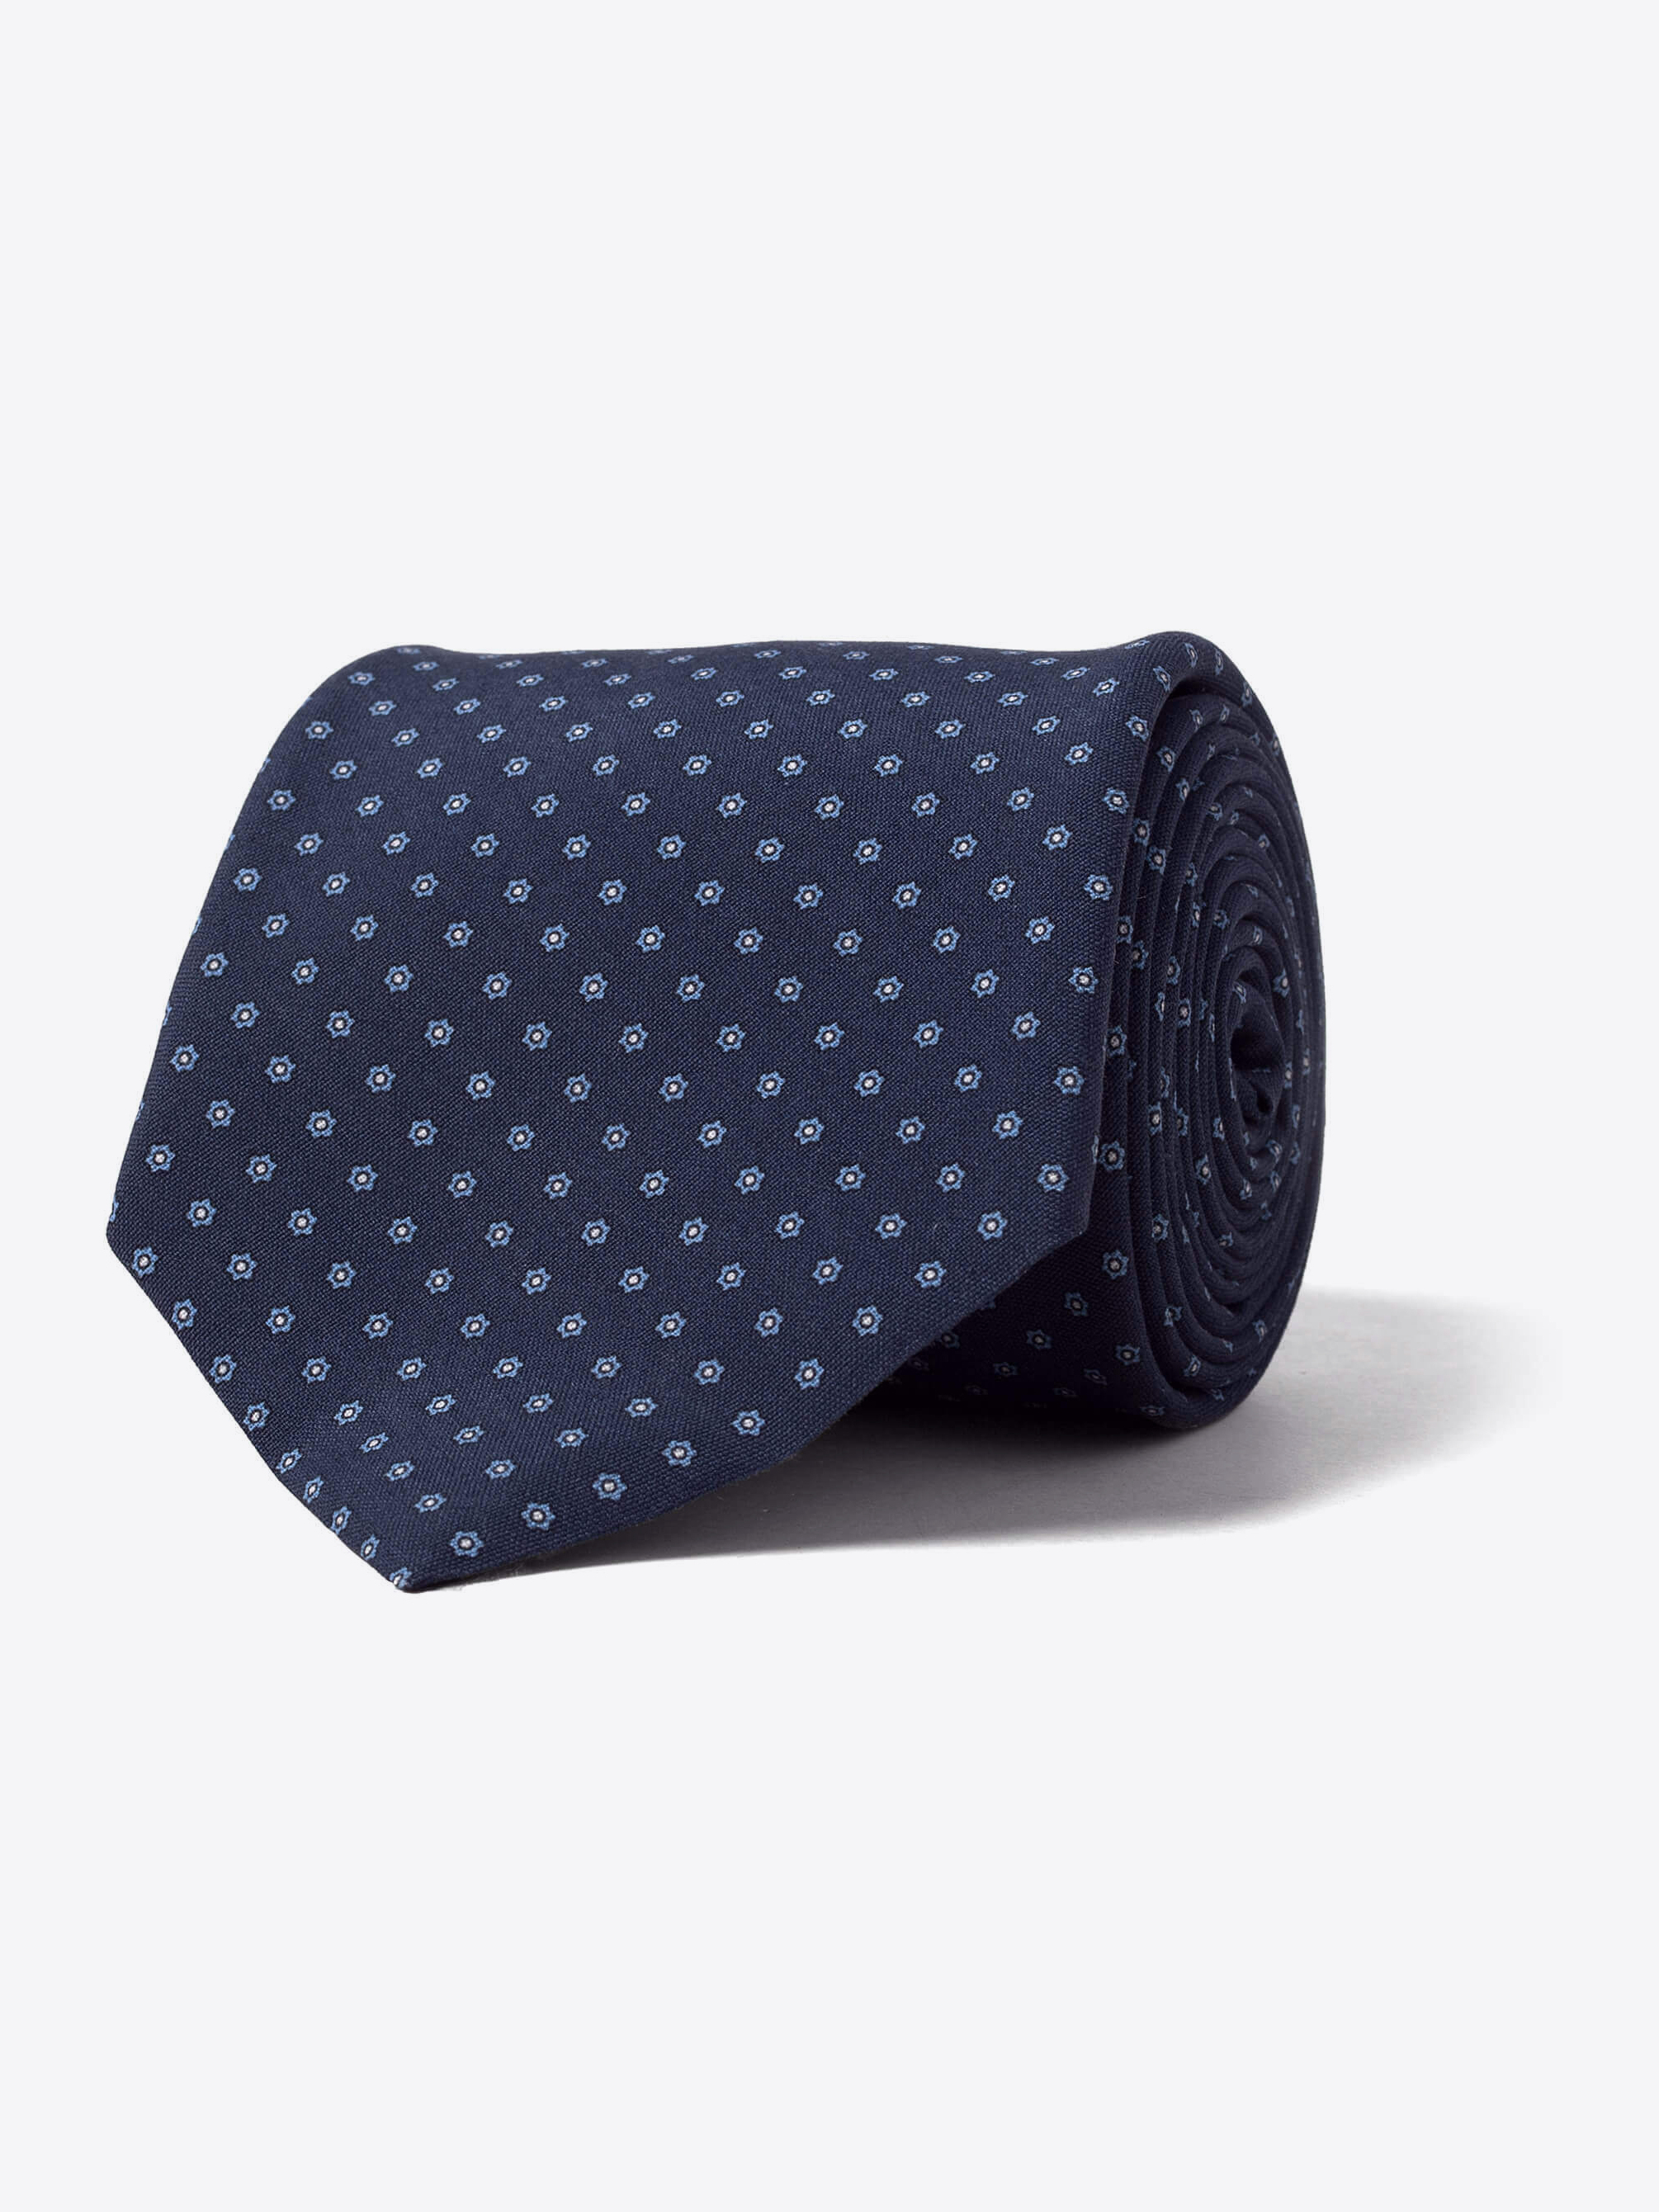 Zoom Image of Navy Small Foulard Silk Tie